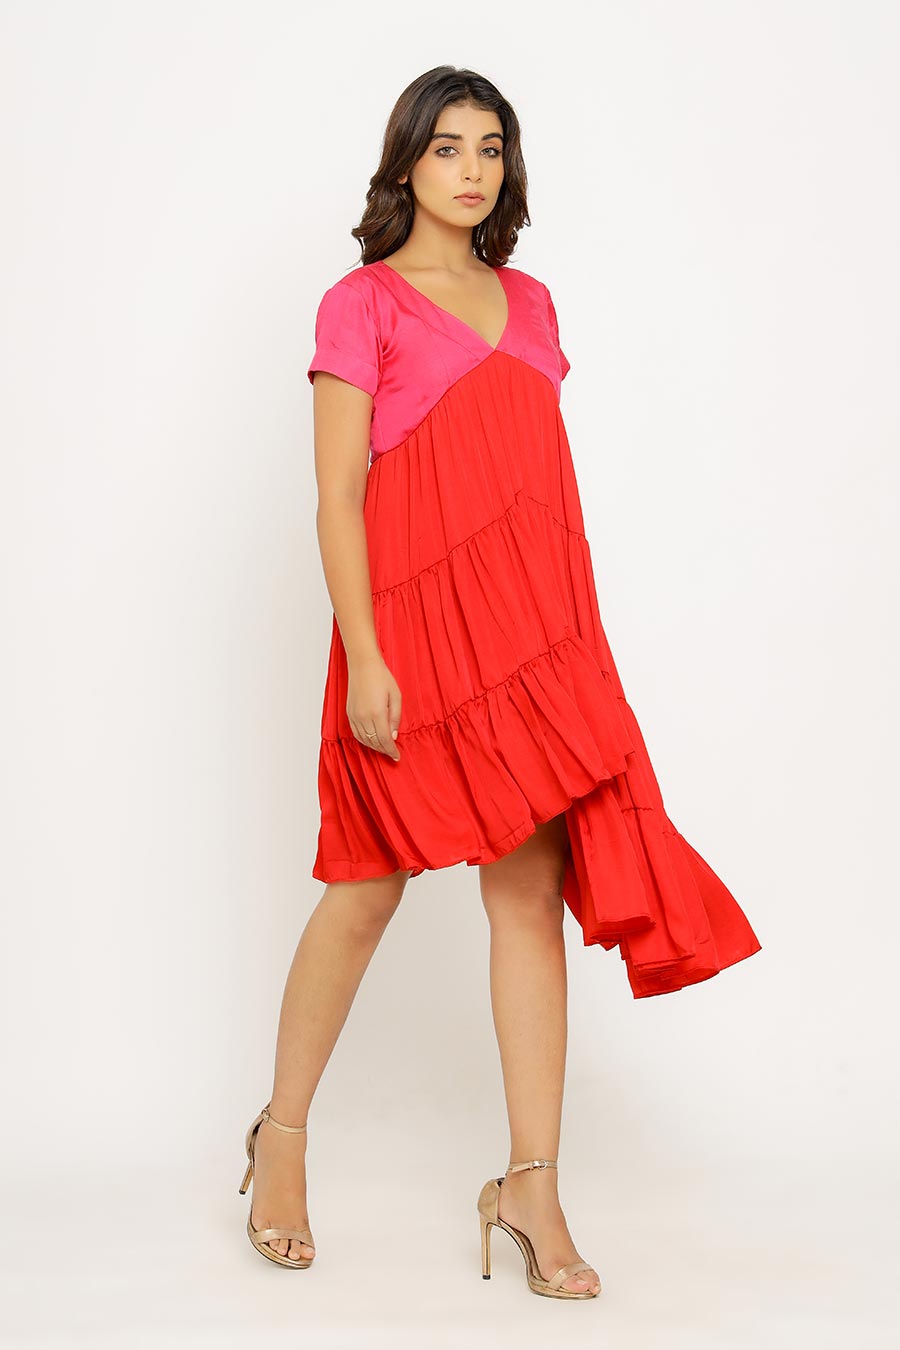 Red & Pink Asymmetrical Dress